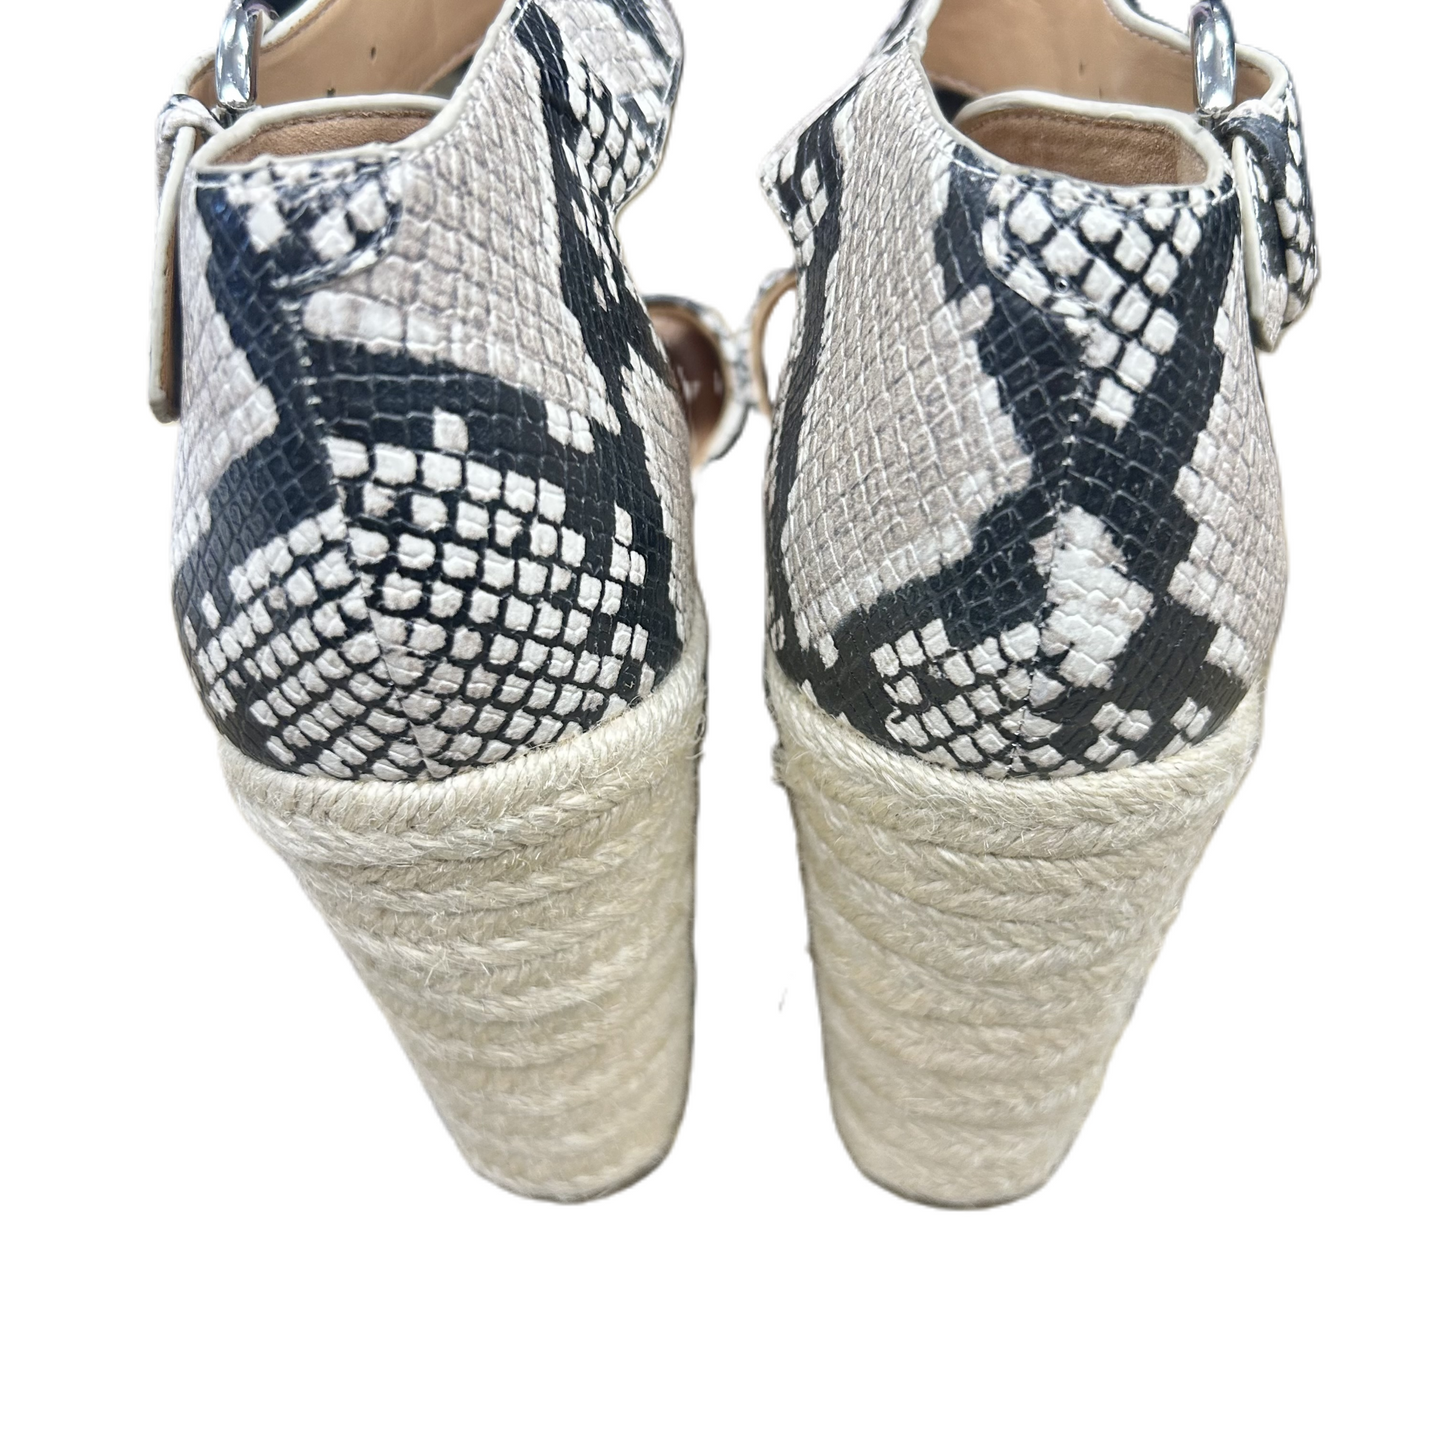 Snakeskin Print Sandals Heels Wedge By Nine West, Size: 8